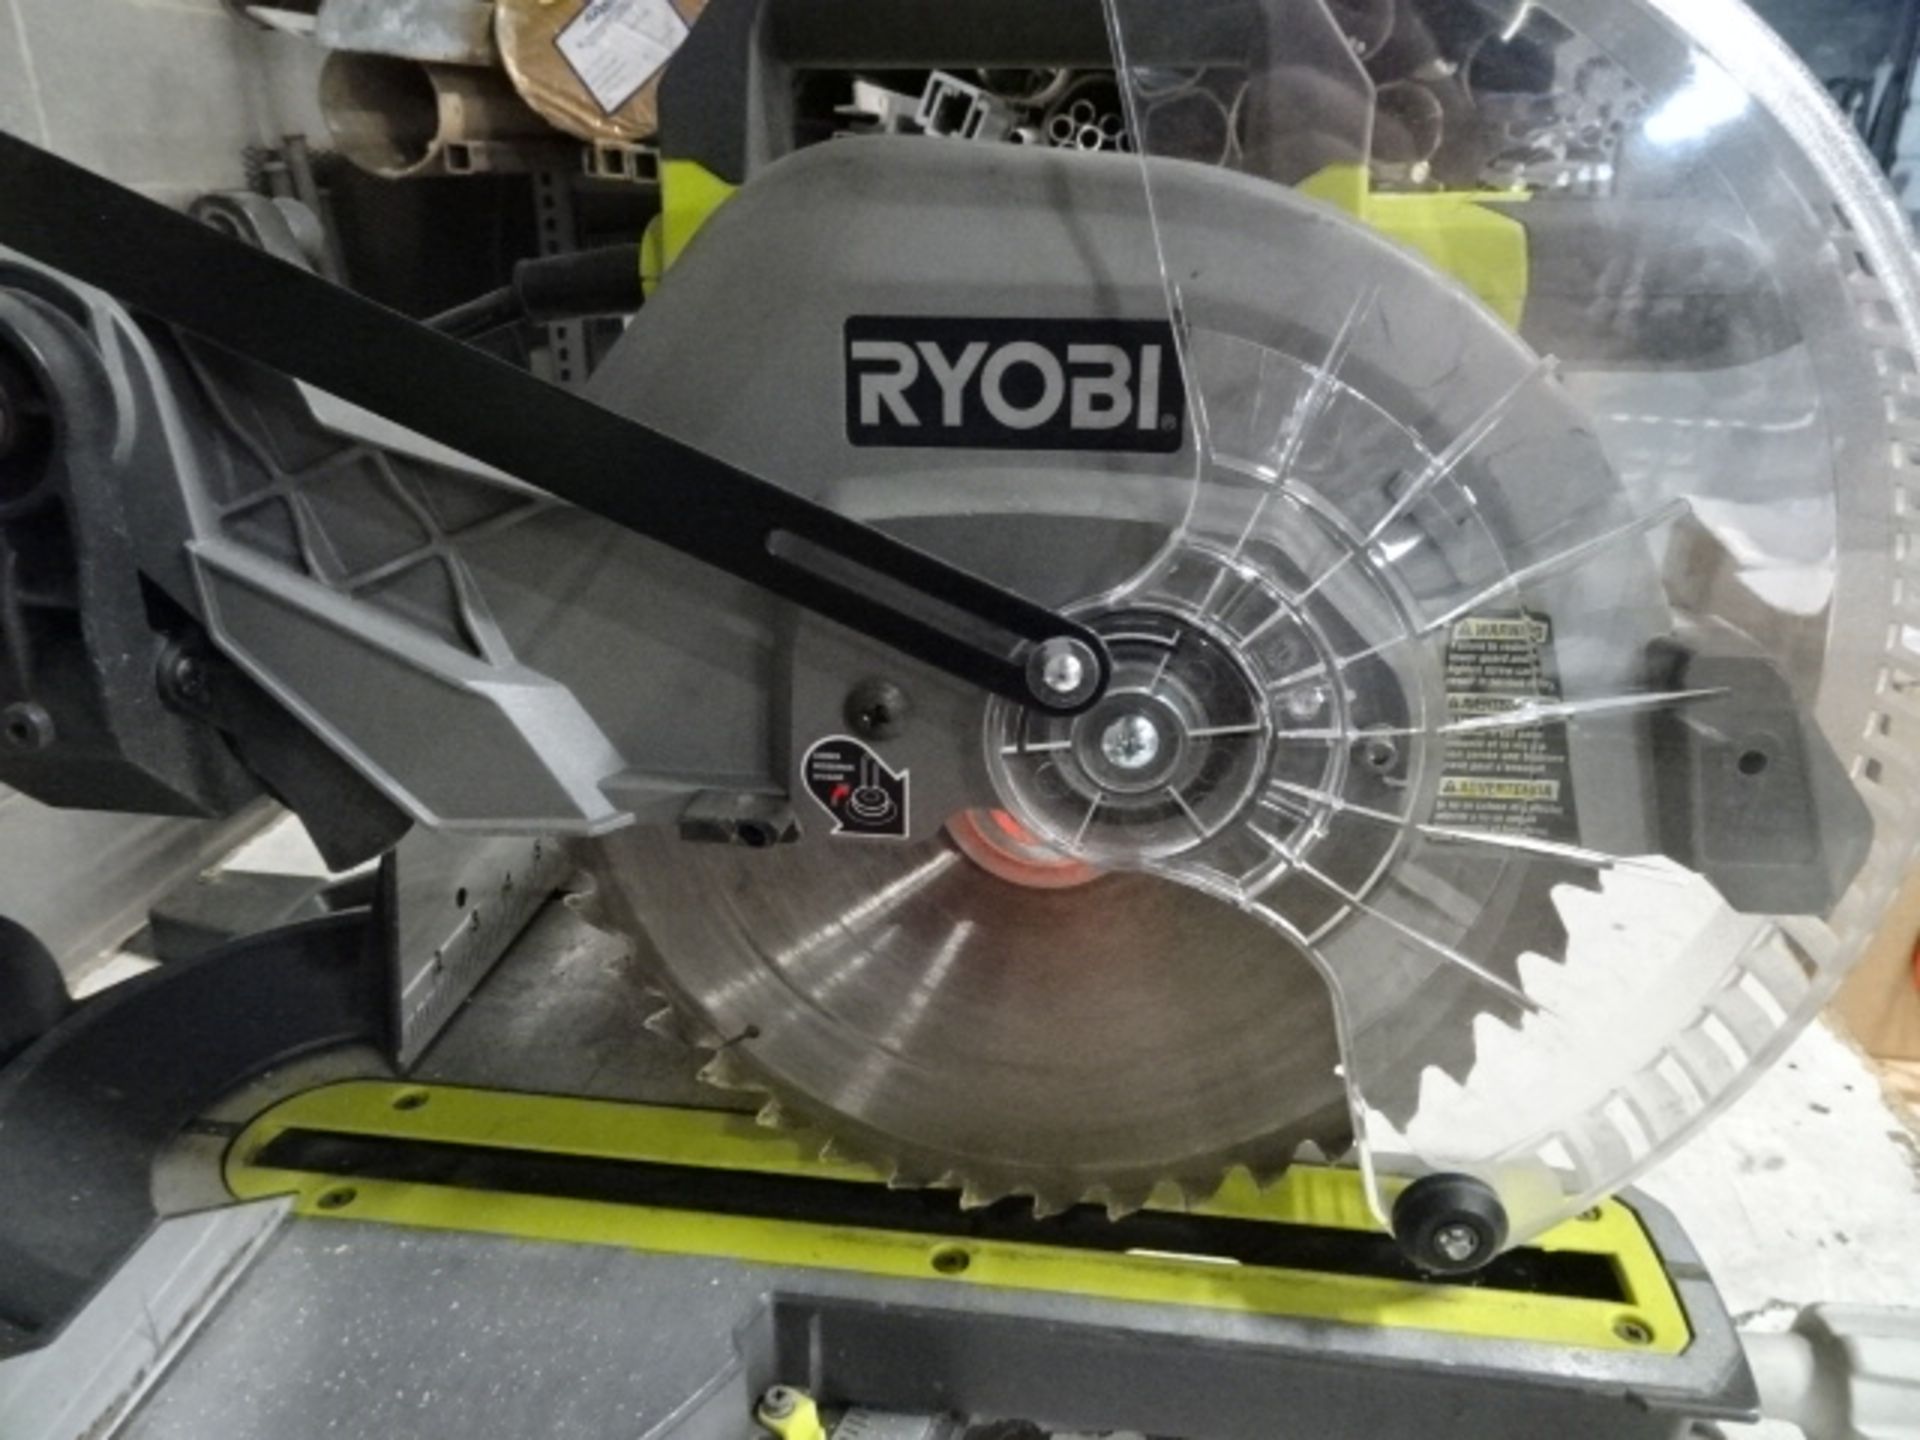 Ryobi Sliding Compound Meter Saw - Image 2 of 3